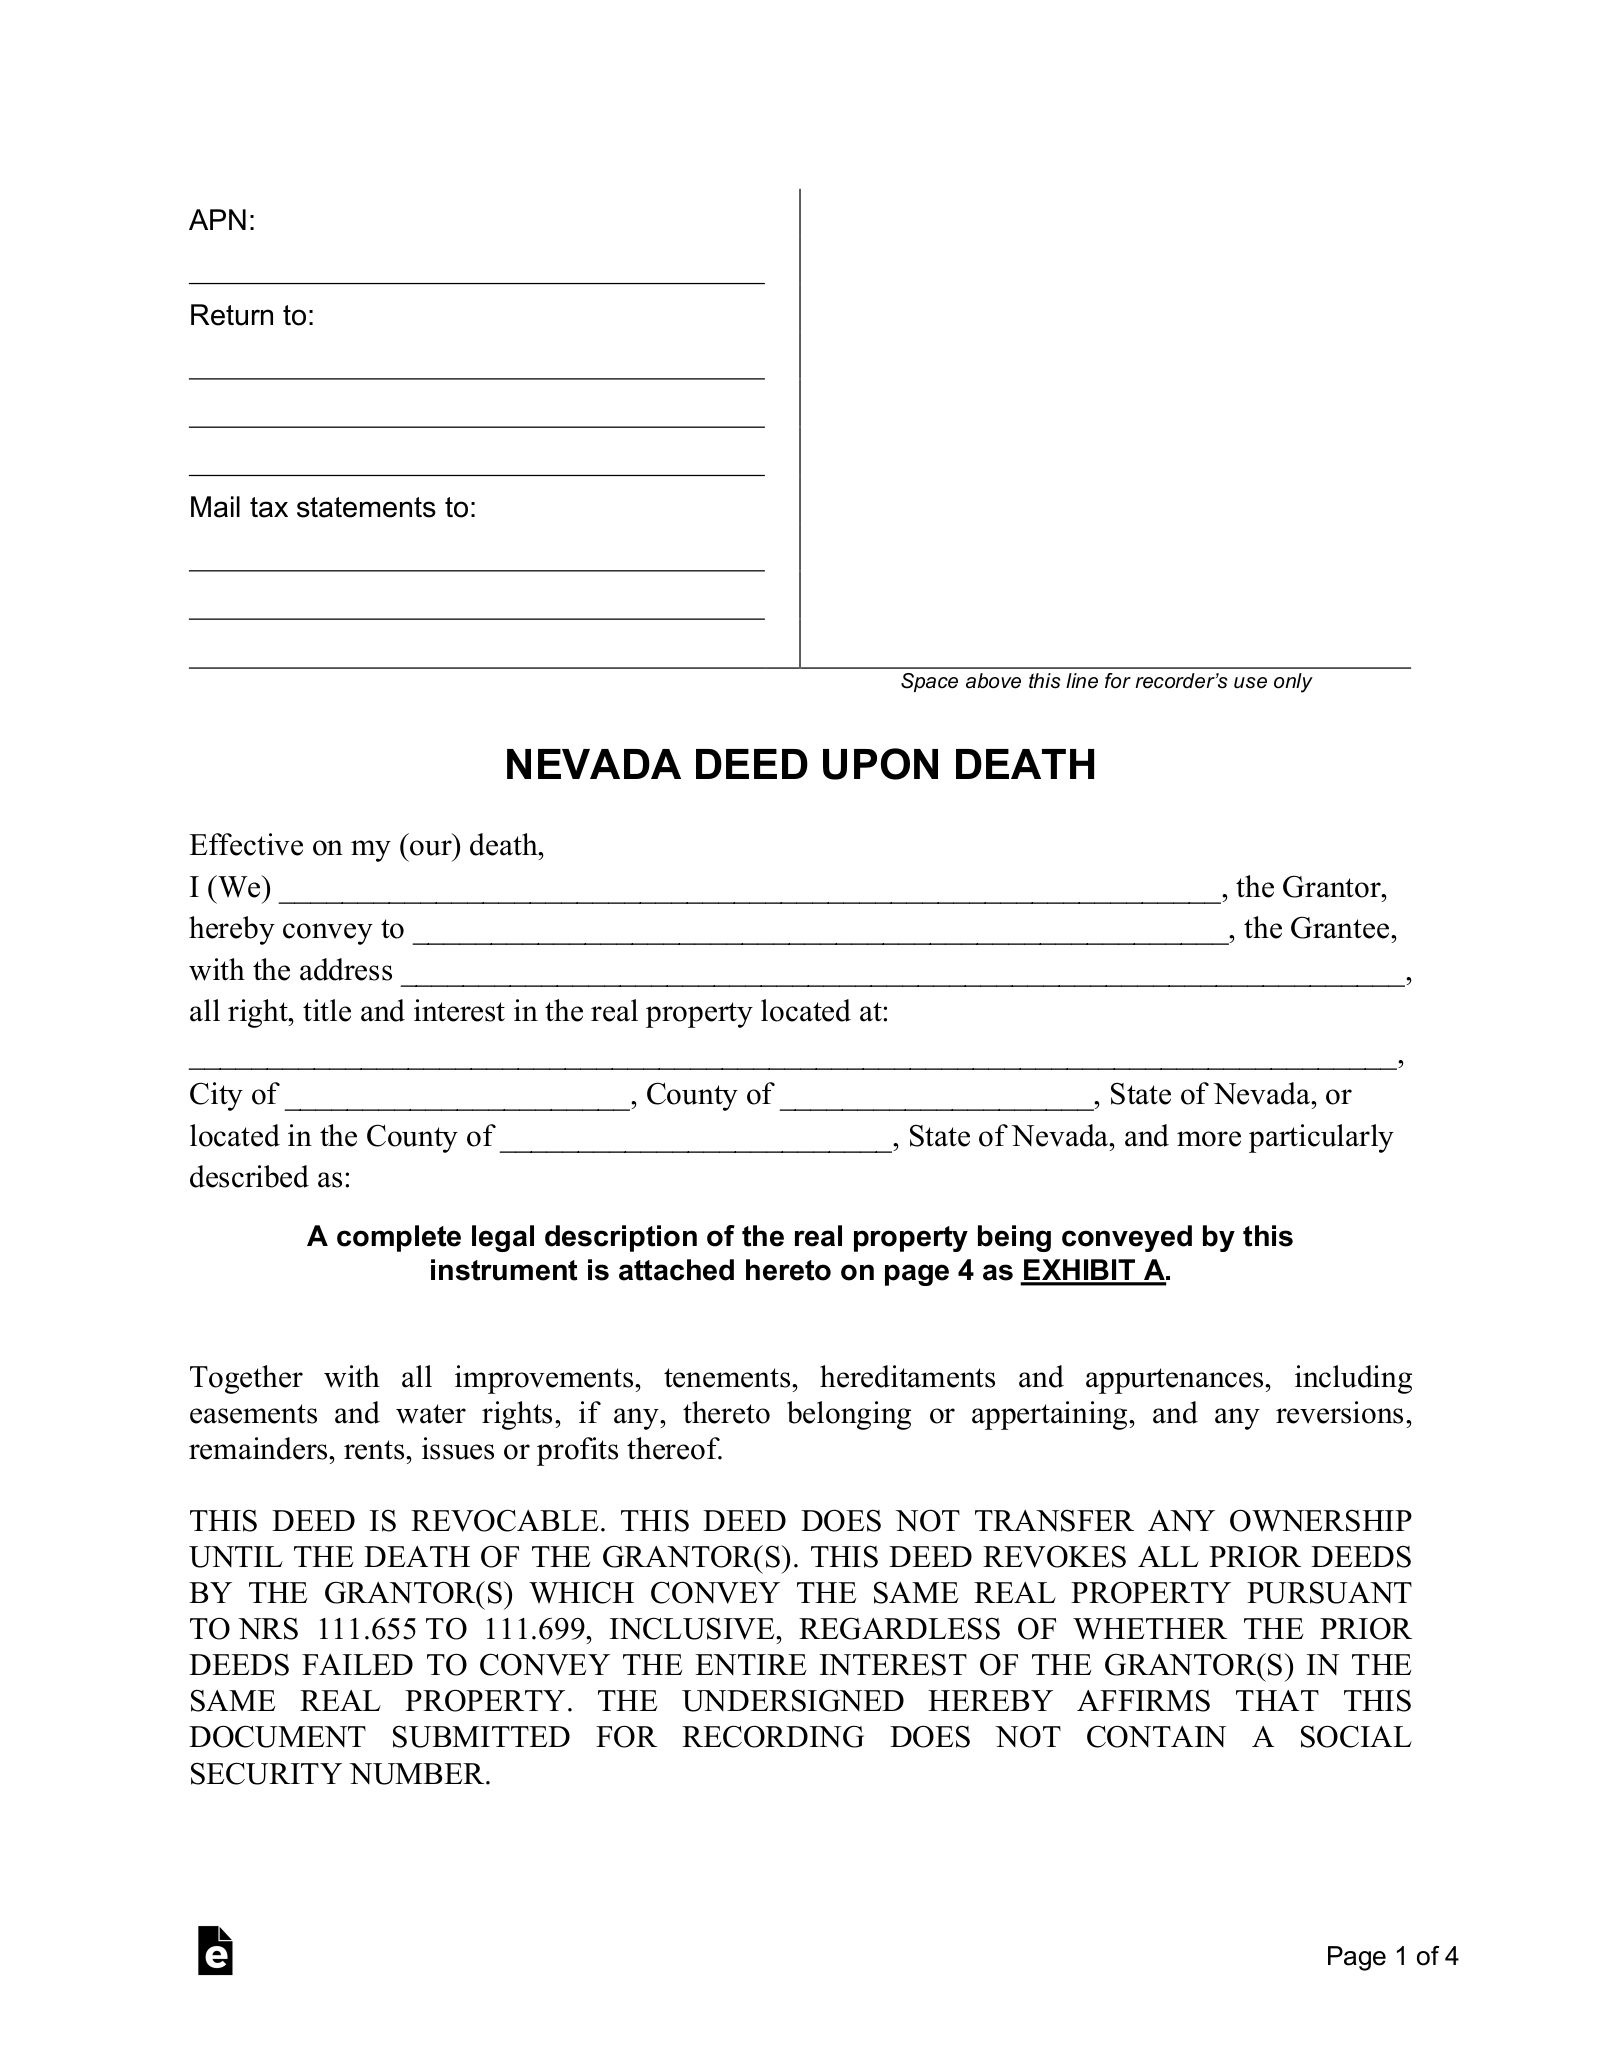 Nevada Transfer on Death Deed